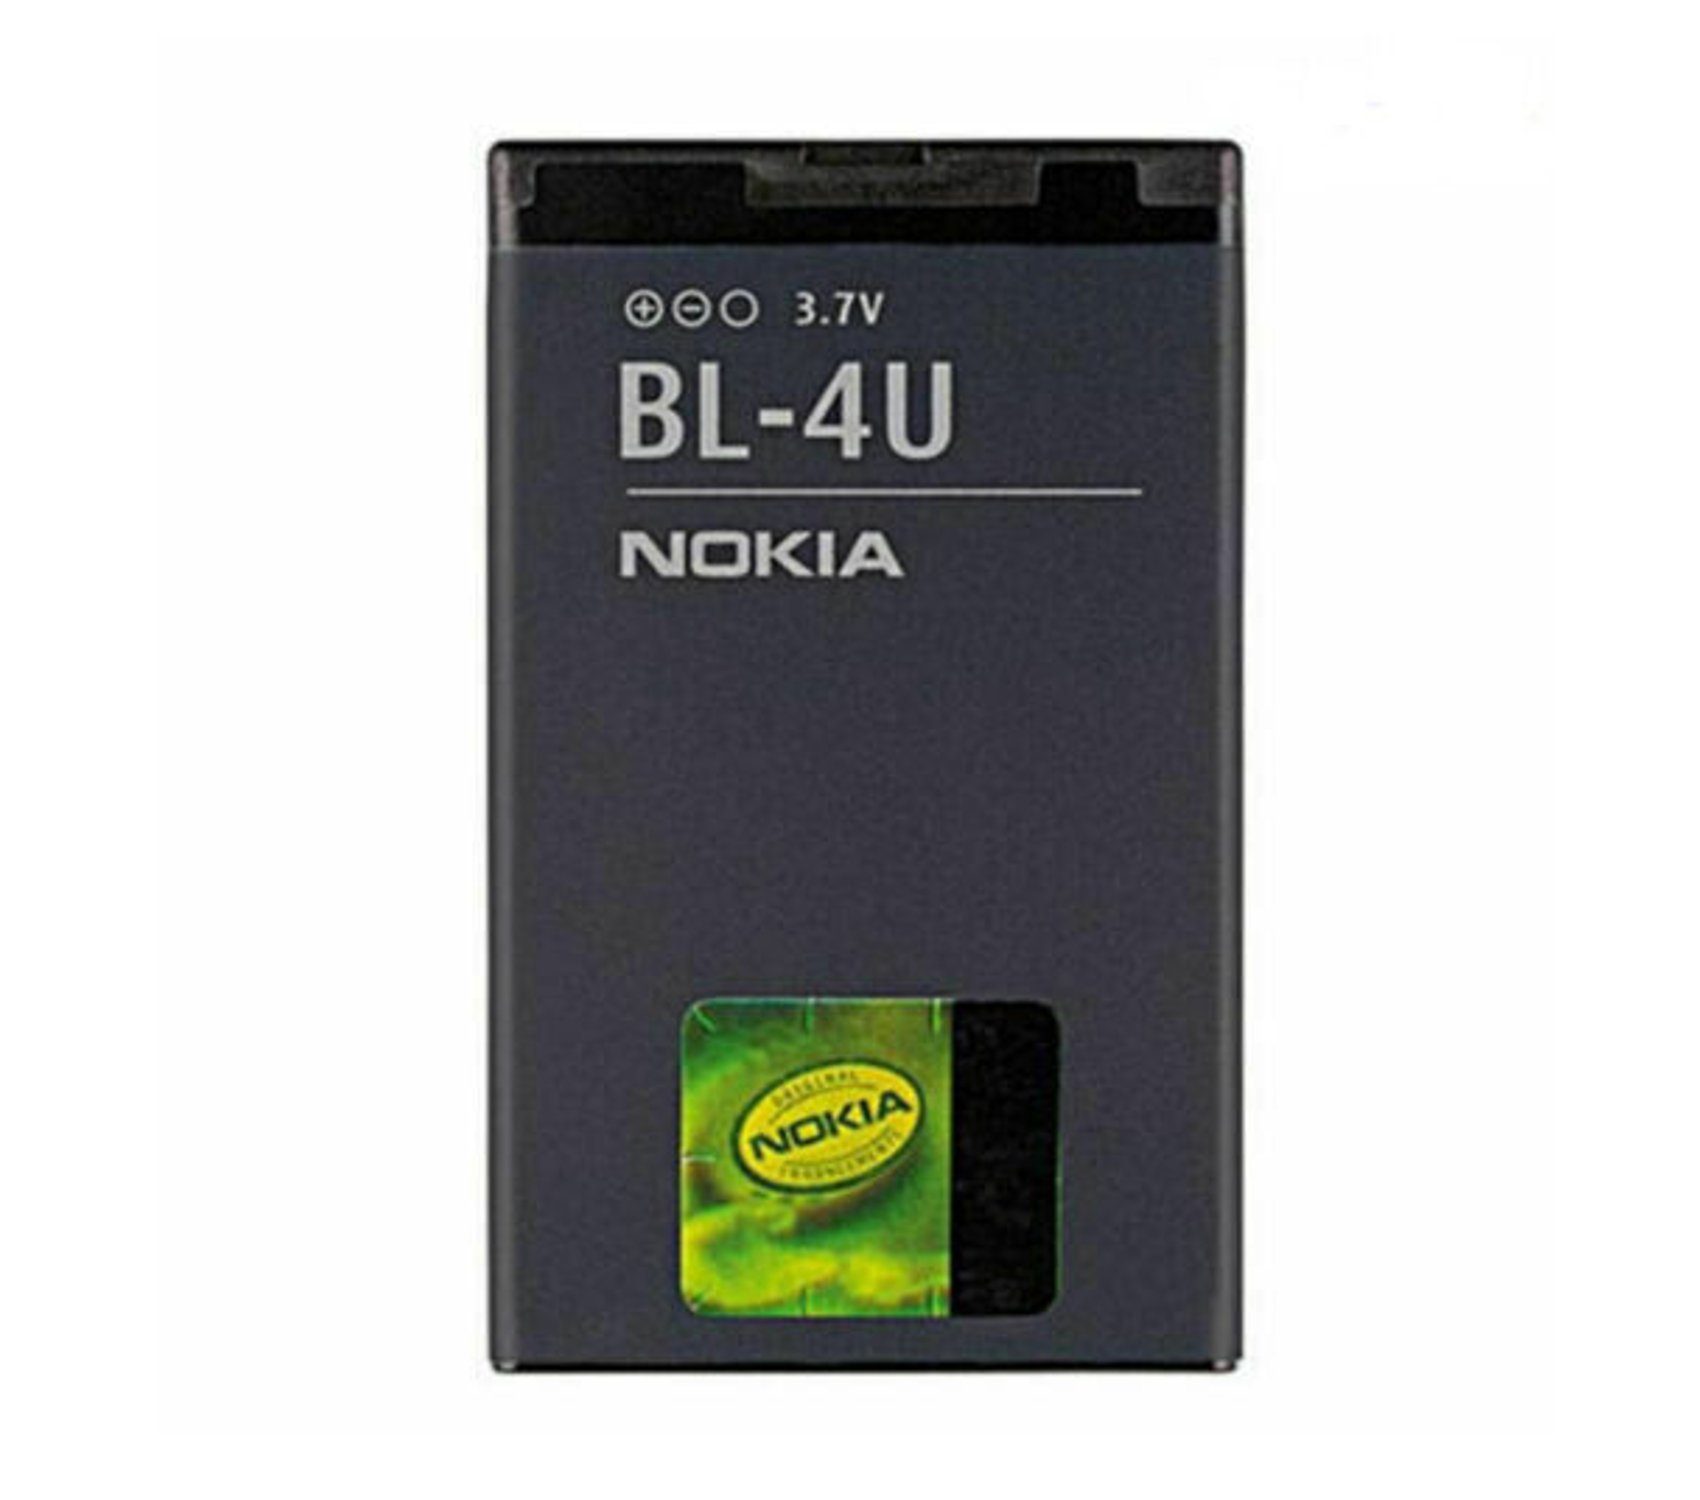 Nokia Original Nokia Laden, Nokia Zellen, 206 Nokia 301 mAh Handy-Akku Überladungsschutz Akku effizientes Li-Ionen 1110 (3,7 BL-4U mAh und BL-4U C5-03 Schnelles 1110 V), 5530 300 500